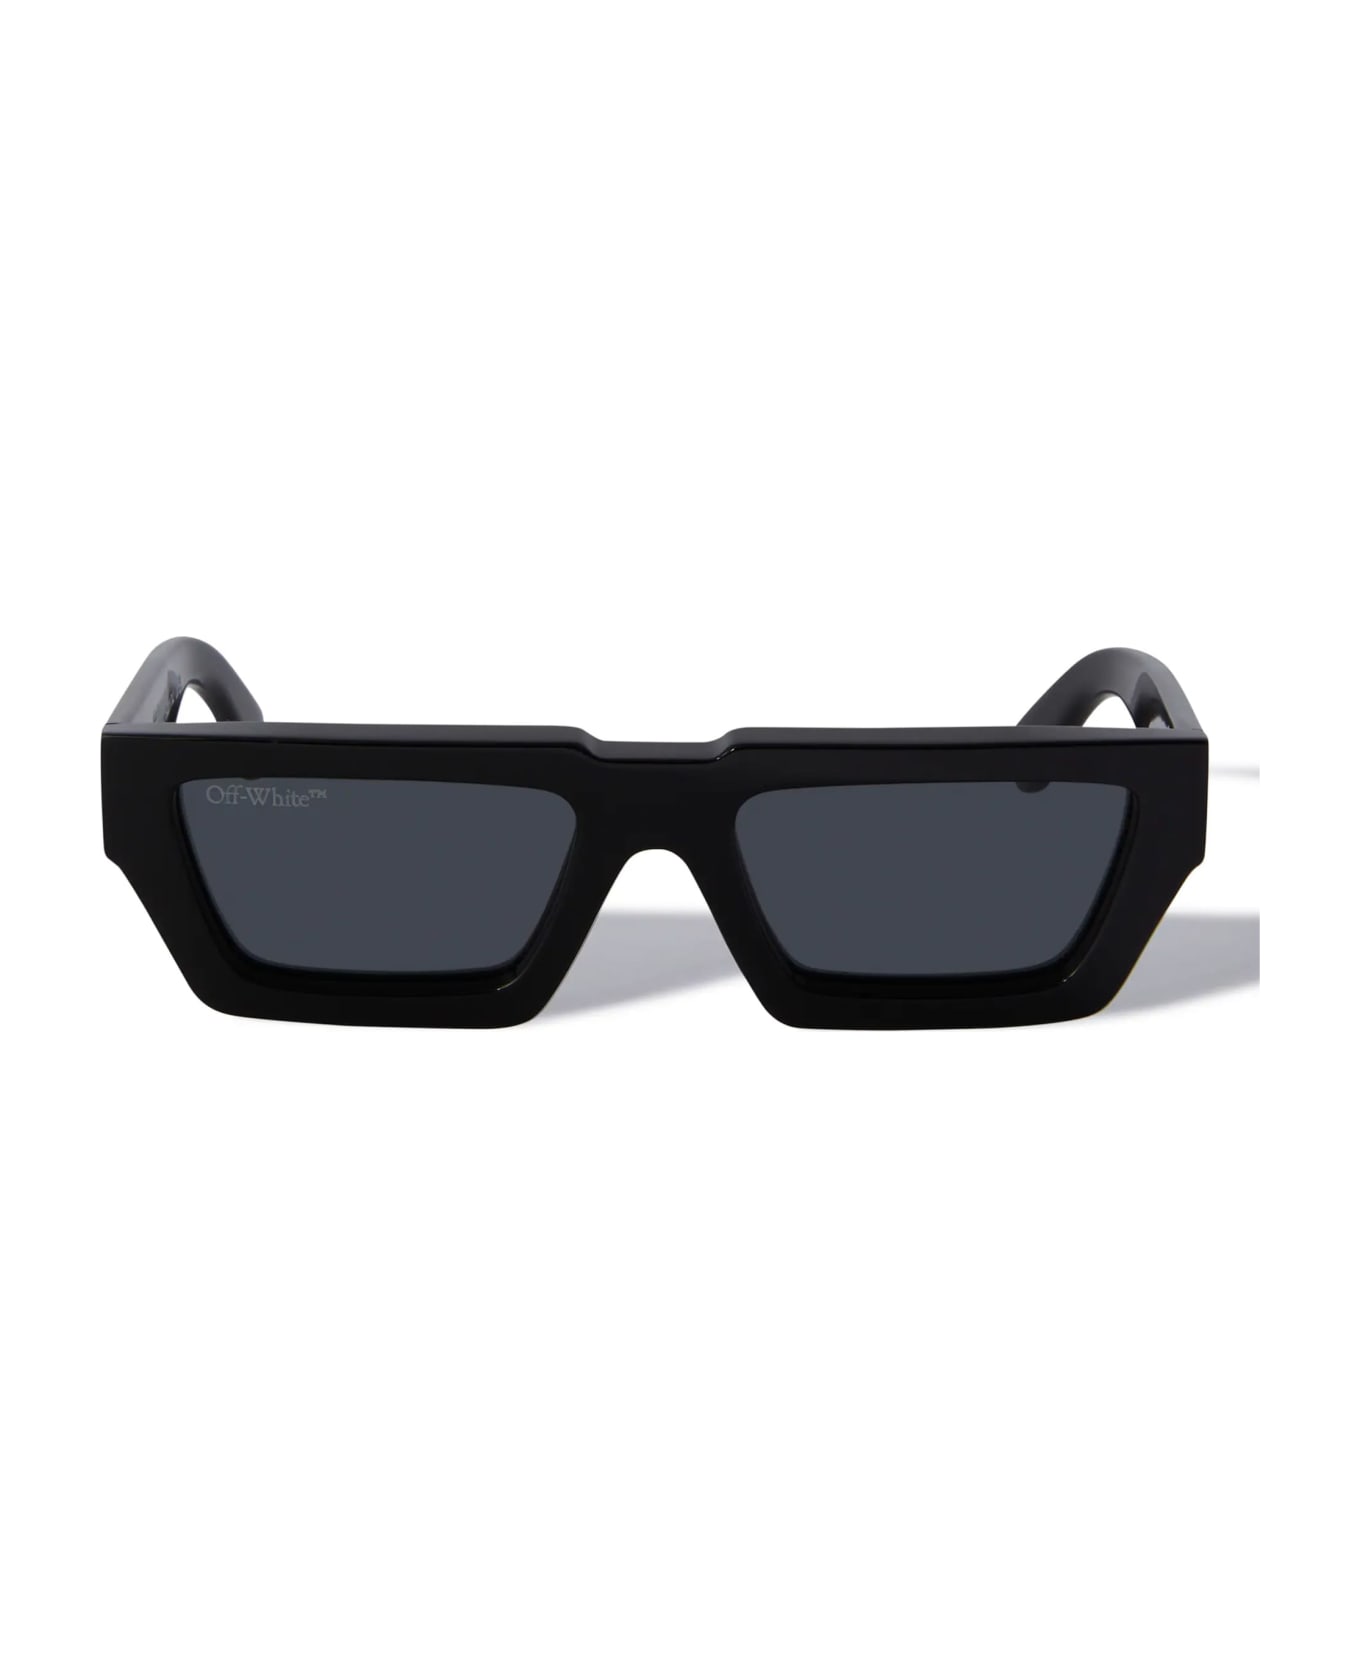 Off-White Manchester - Black / Dark Grey Sunglasses - Black